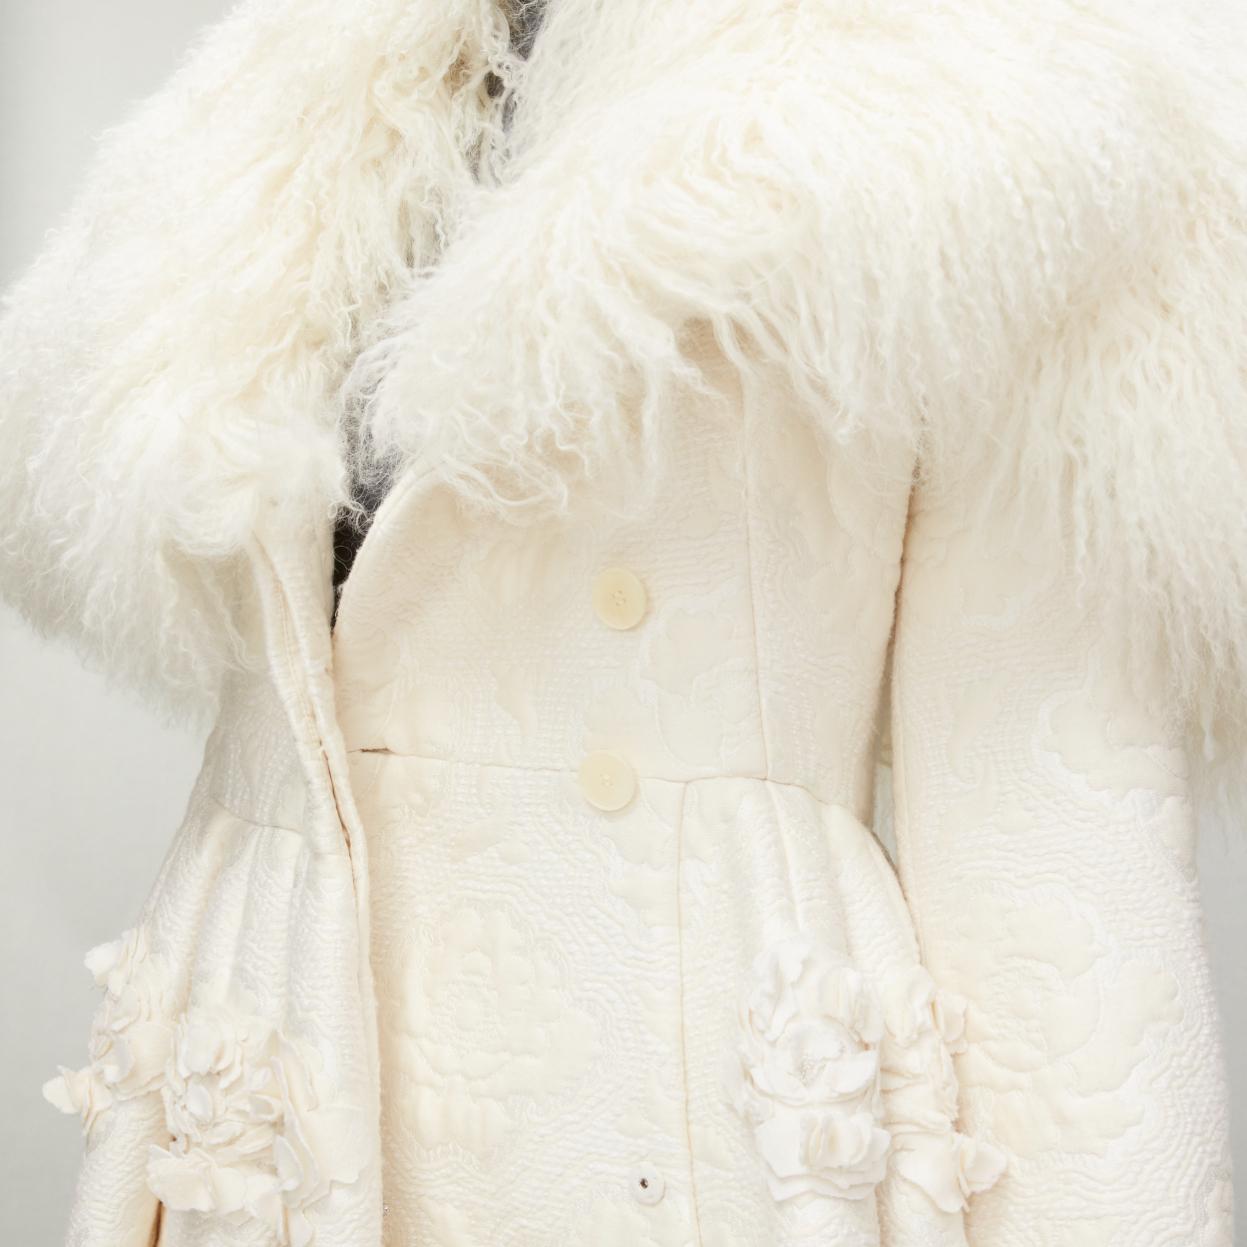 rare ALEXANDER MCQUEEN Sarah Burton 2012 Runway shearling coat dress IT38 XS For Sale 2